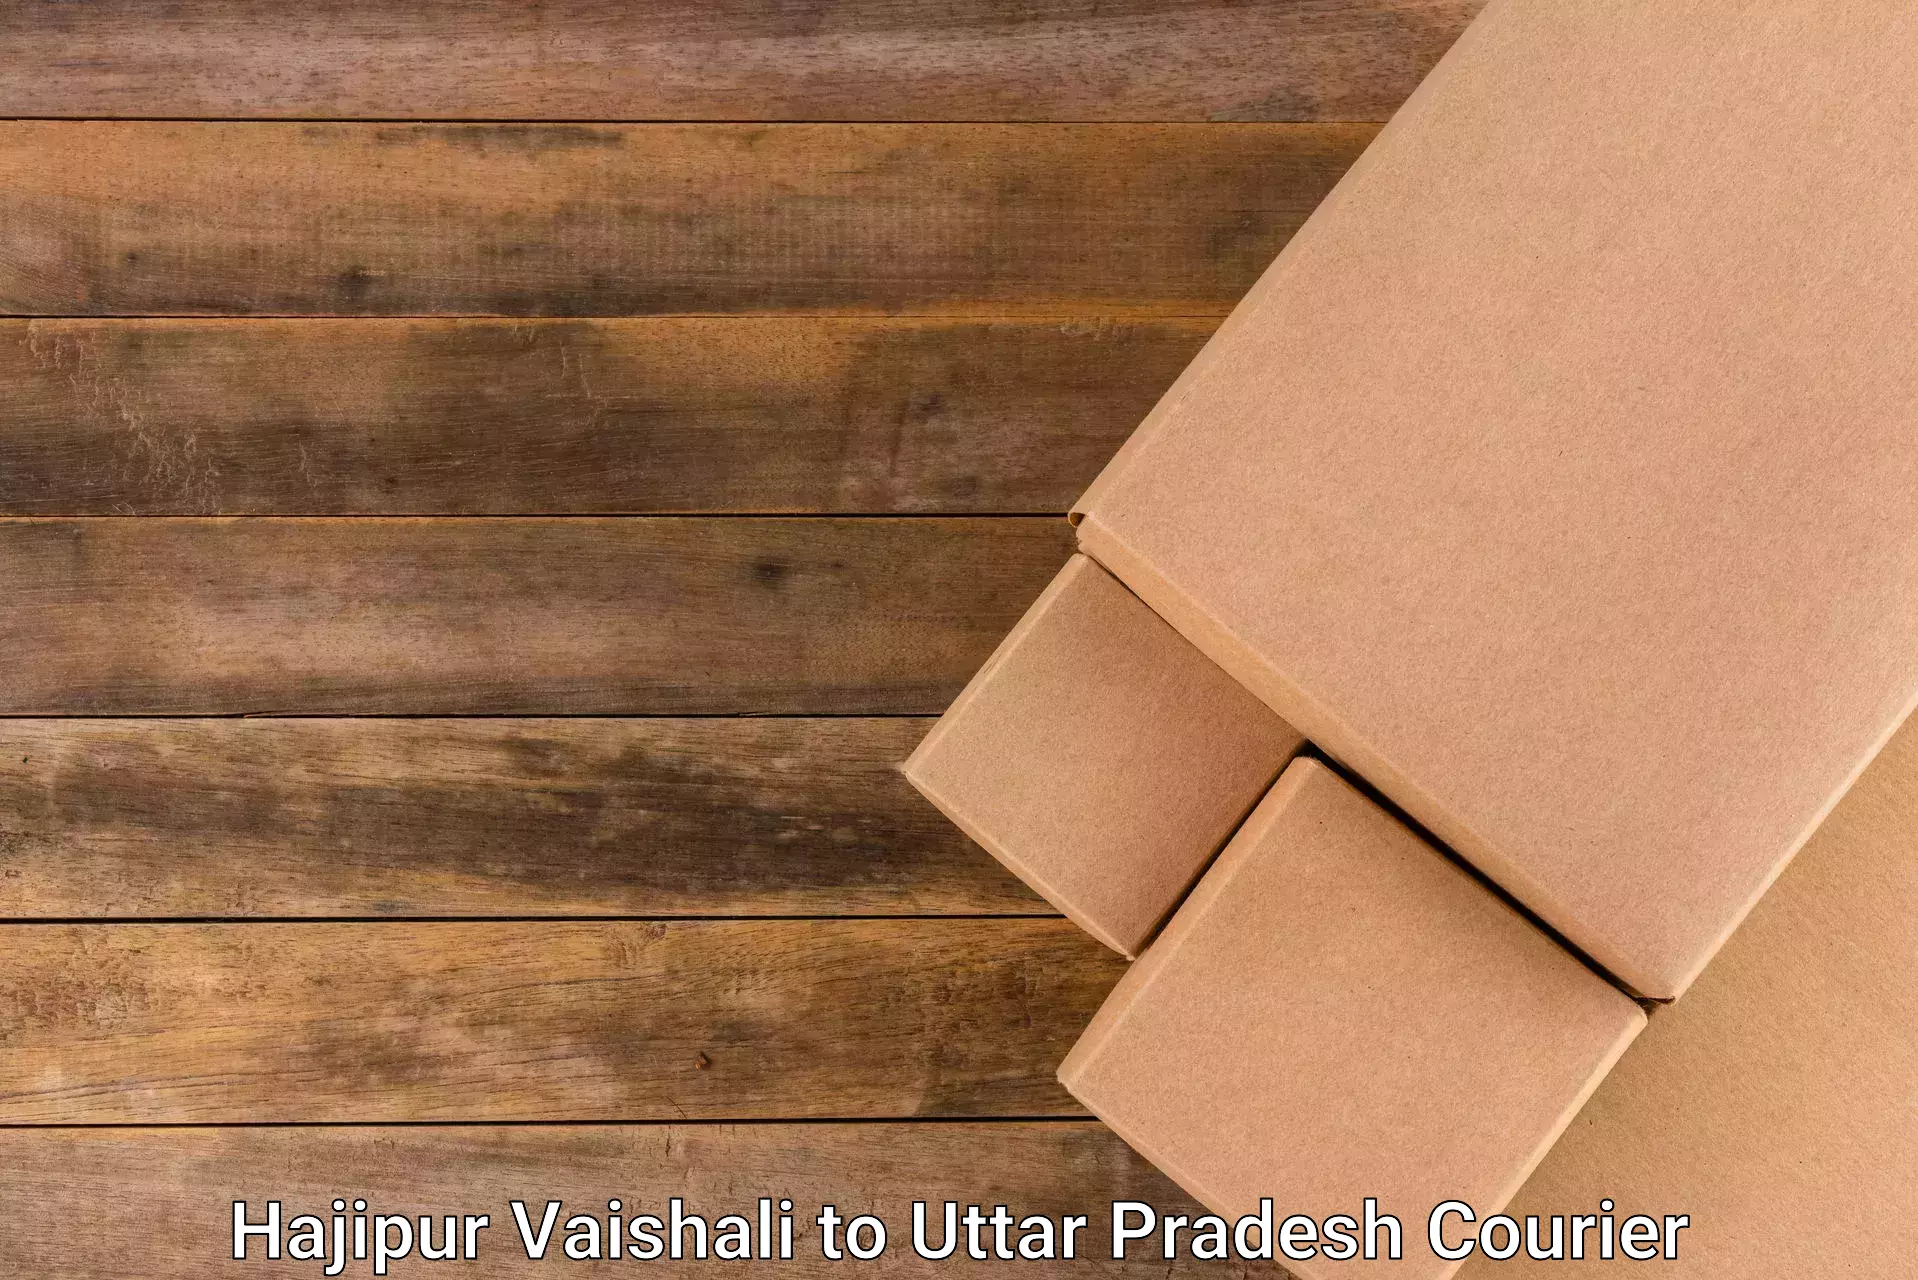 Pharmaceutical courier Hajipur Vaishali to Lalitpur